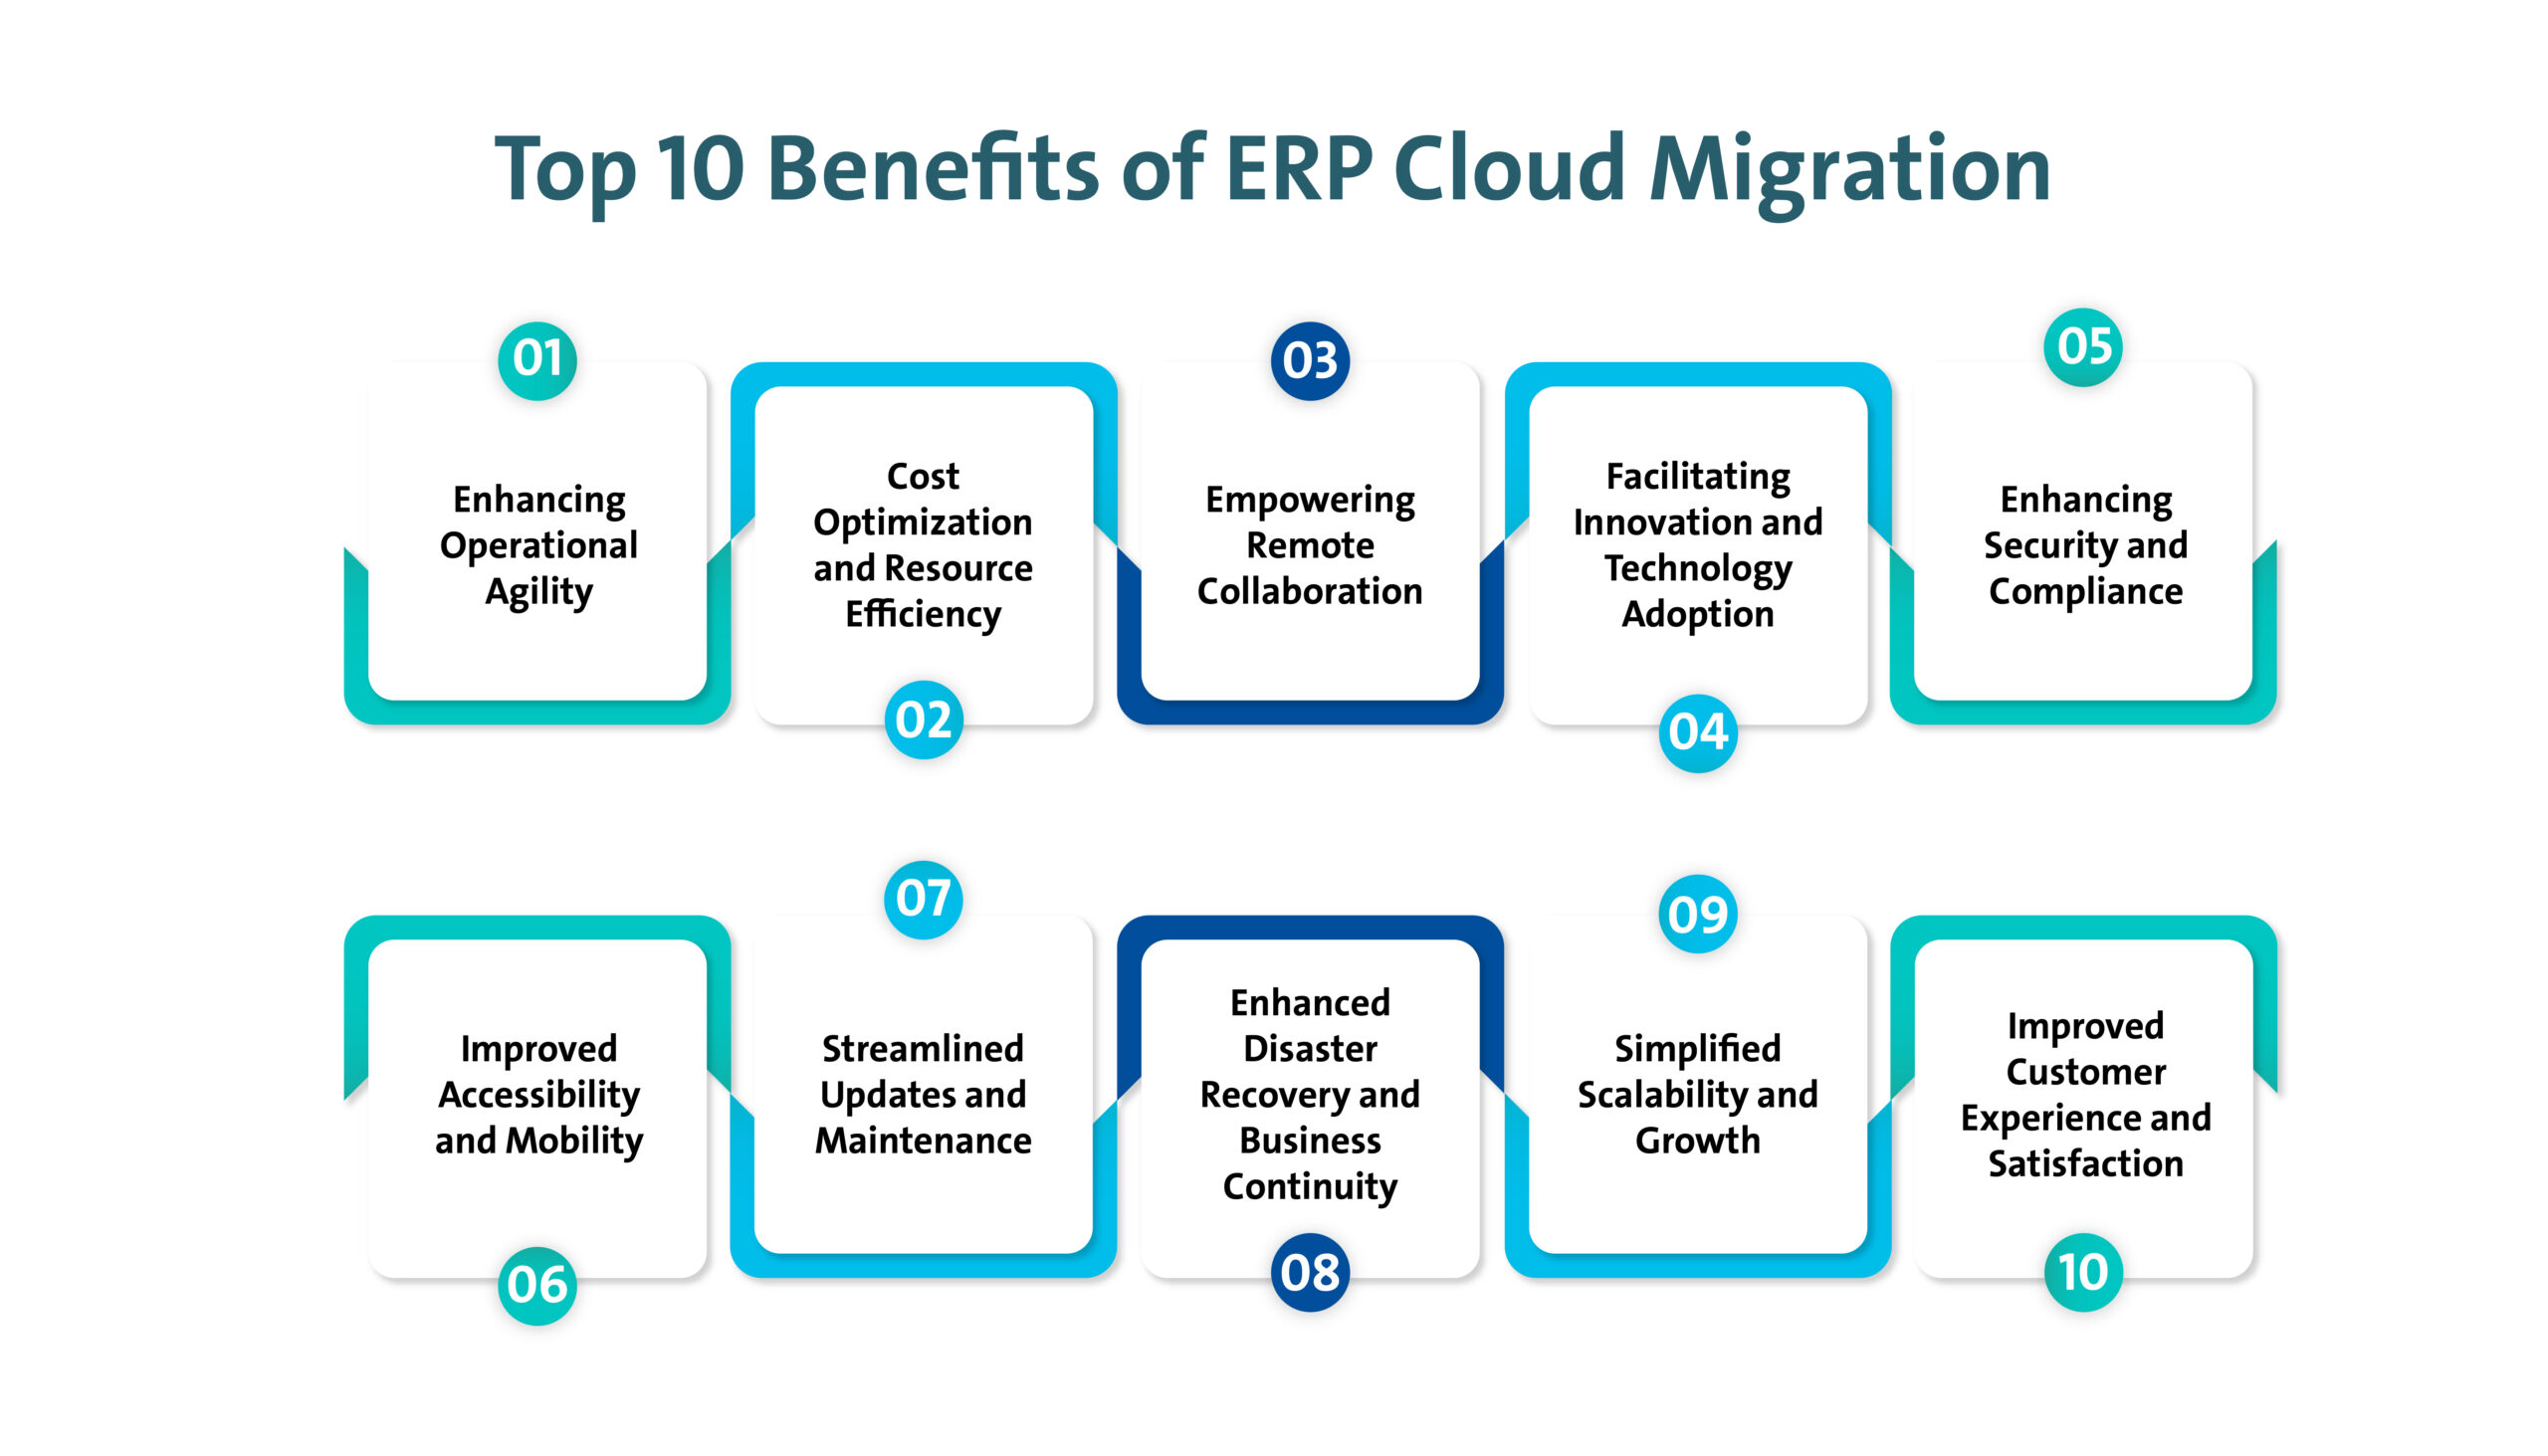 Fig 1: Top 10 Benefits of ERP Cloud Migration